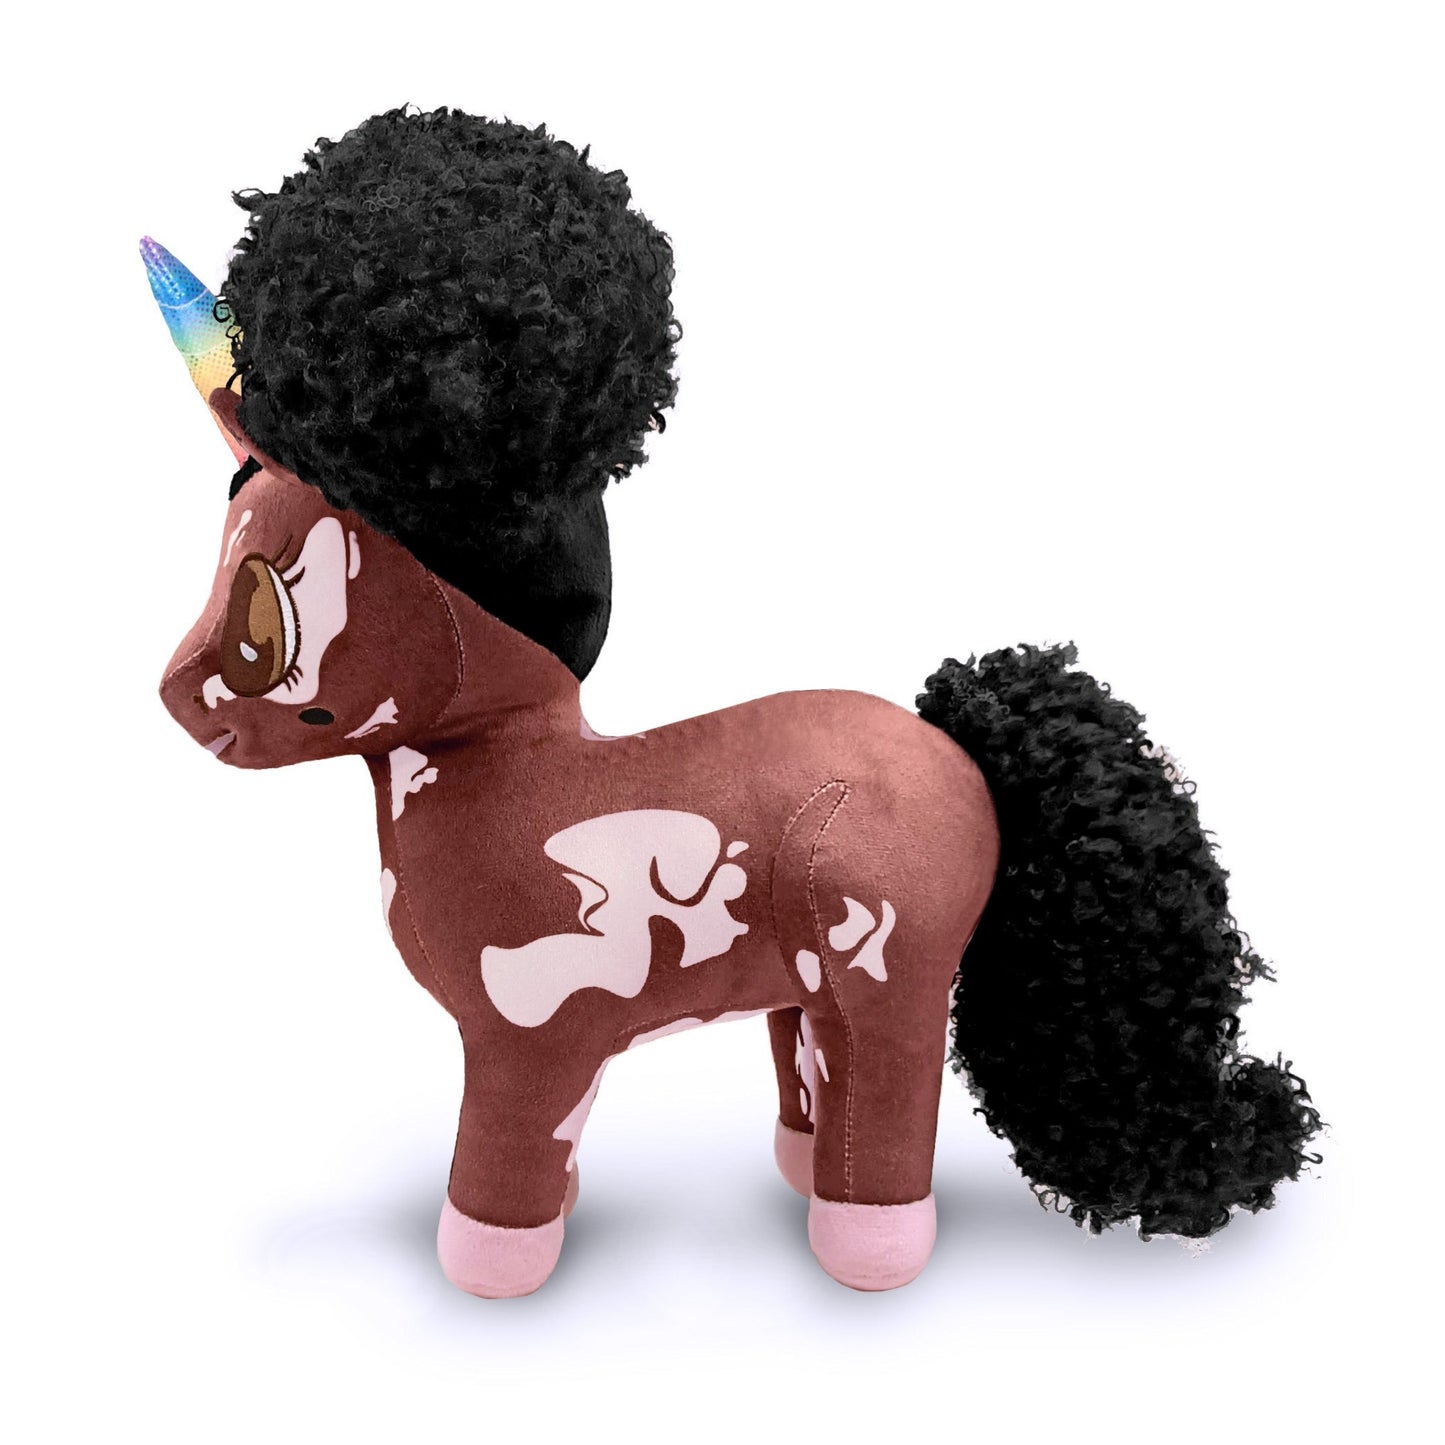 Tianca Unicorn with Vitiligo Plush Toy - 15 inch